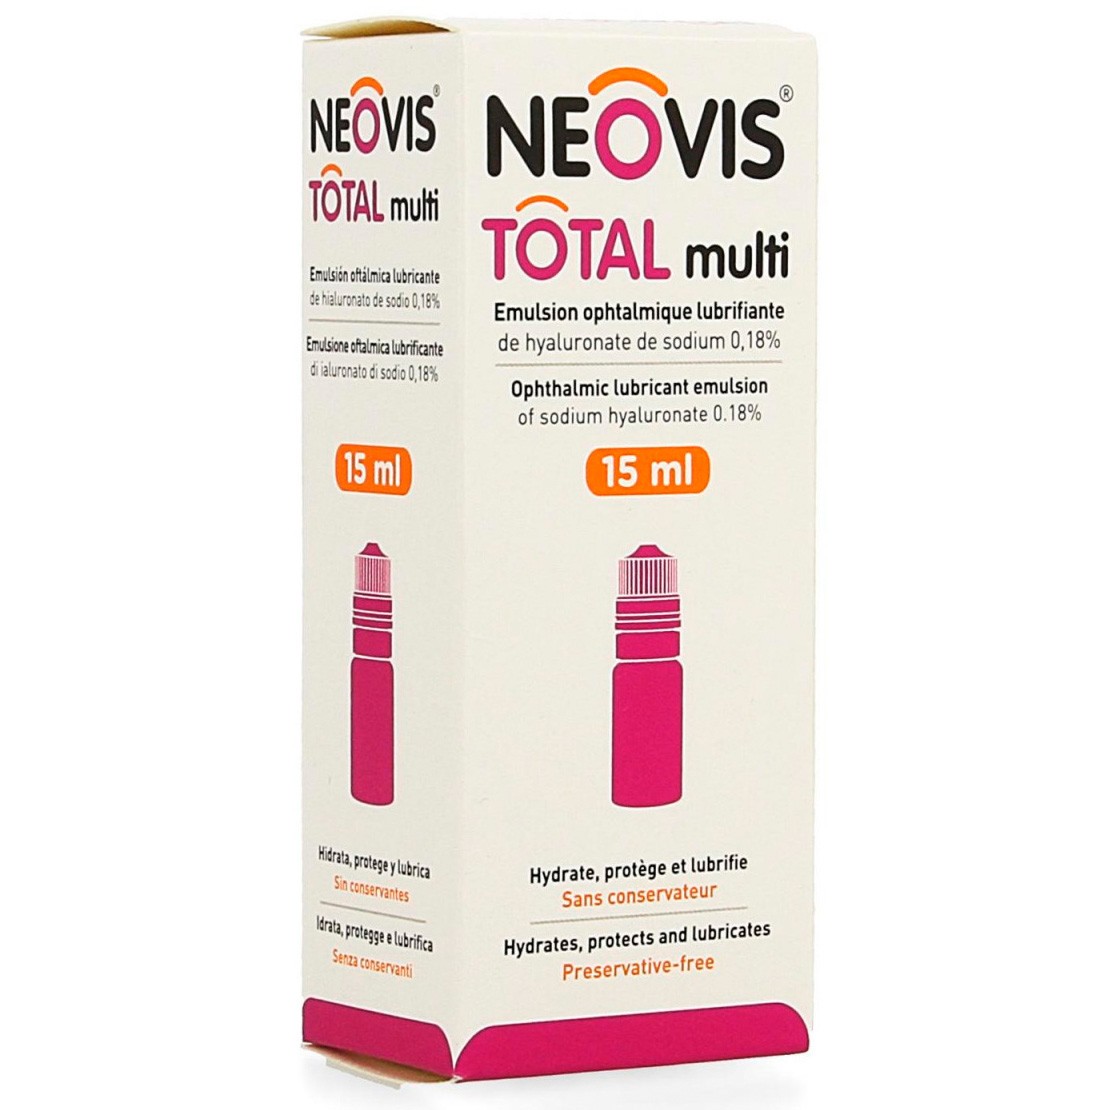 Neovis total multi 15ml